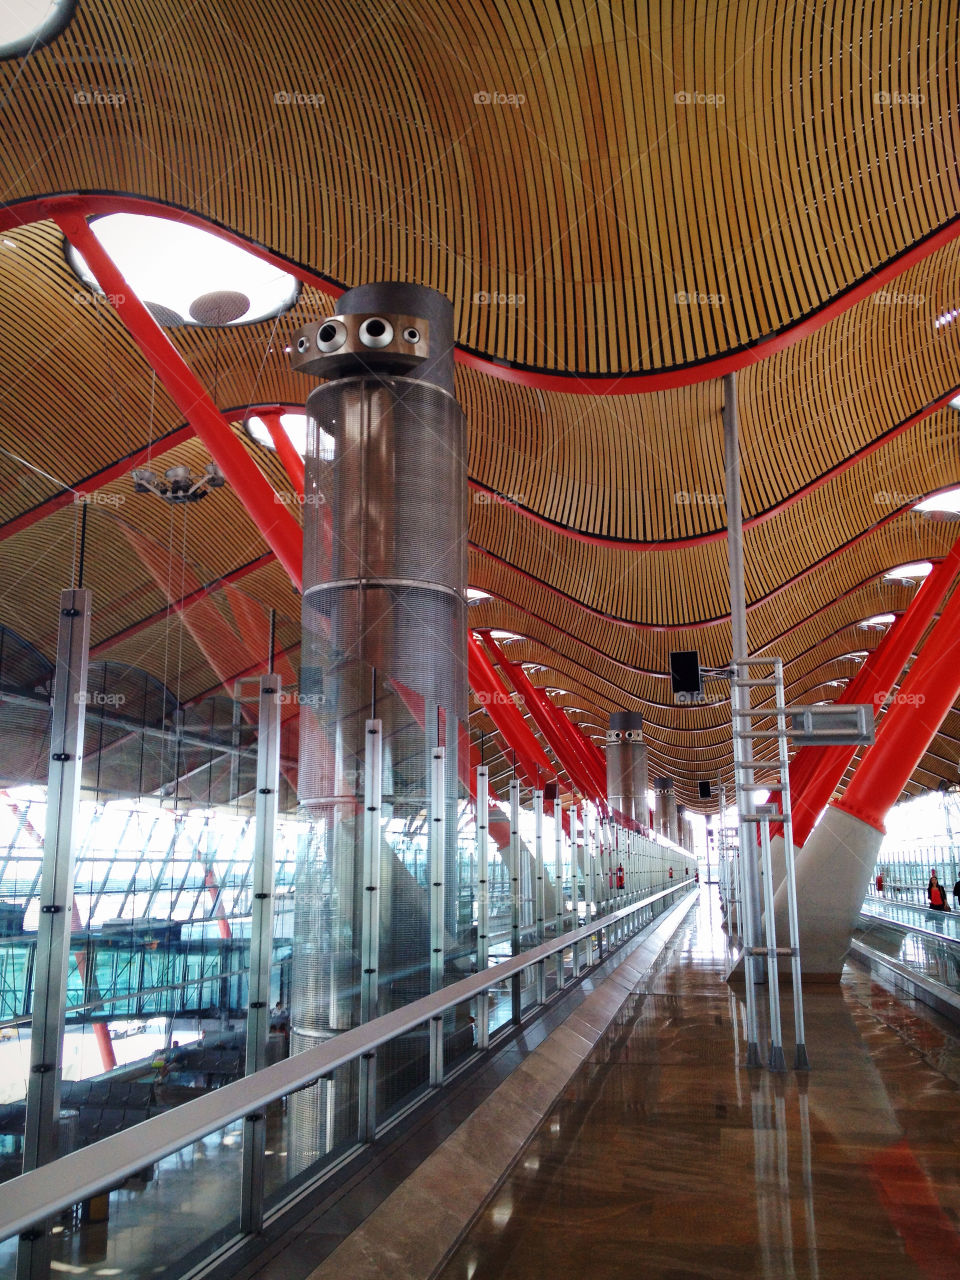 design airport building architecture by frillescg